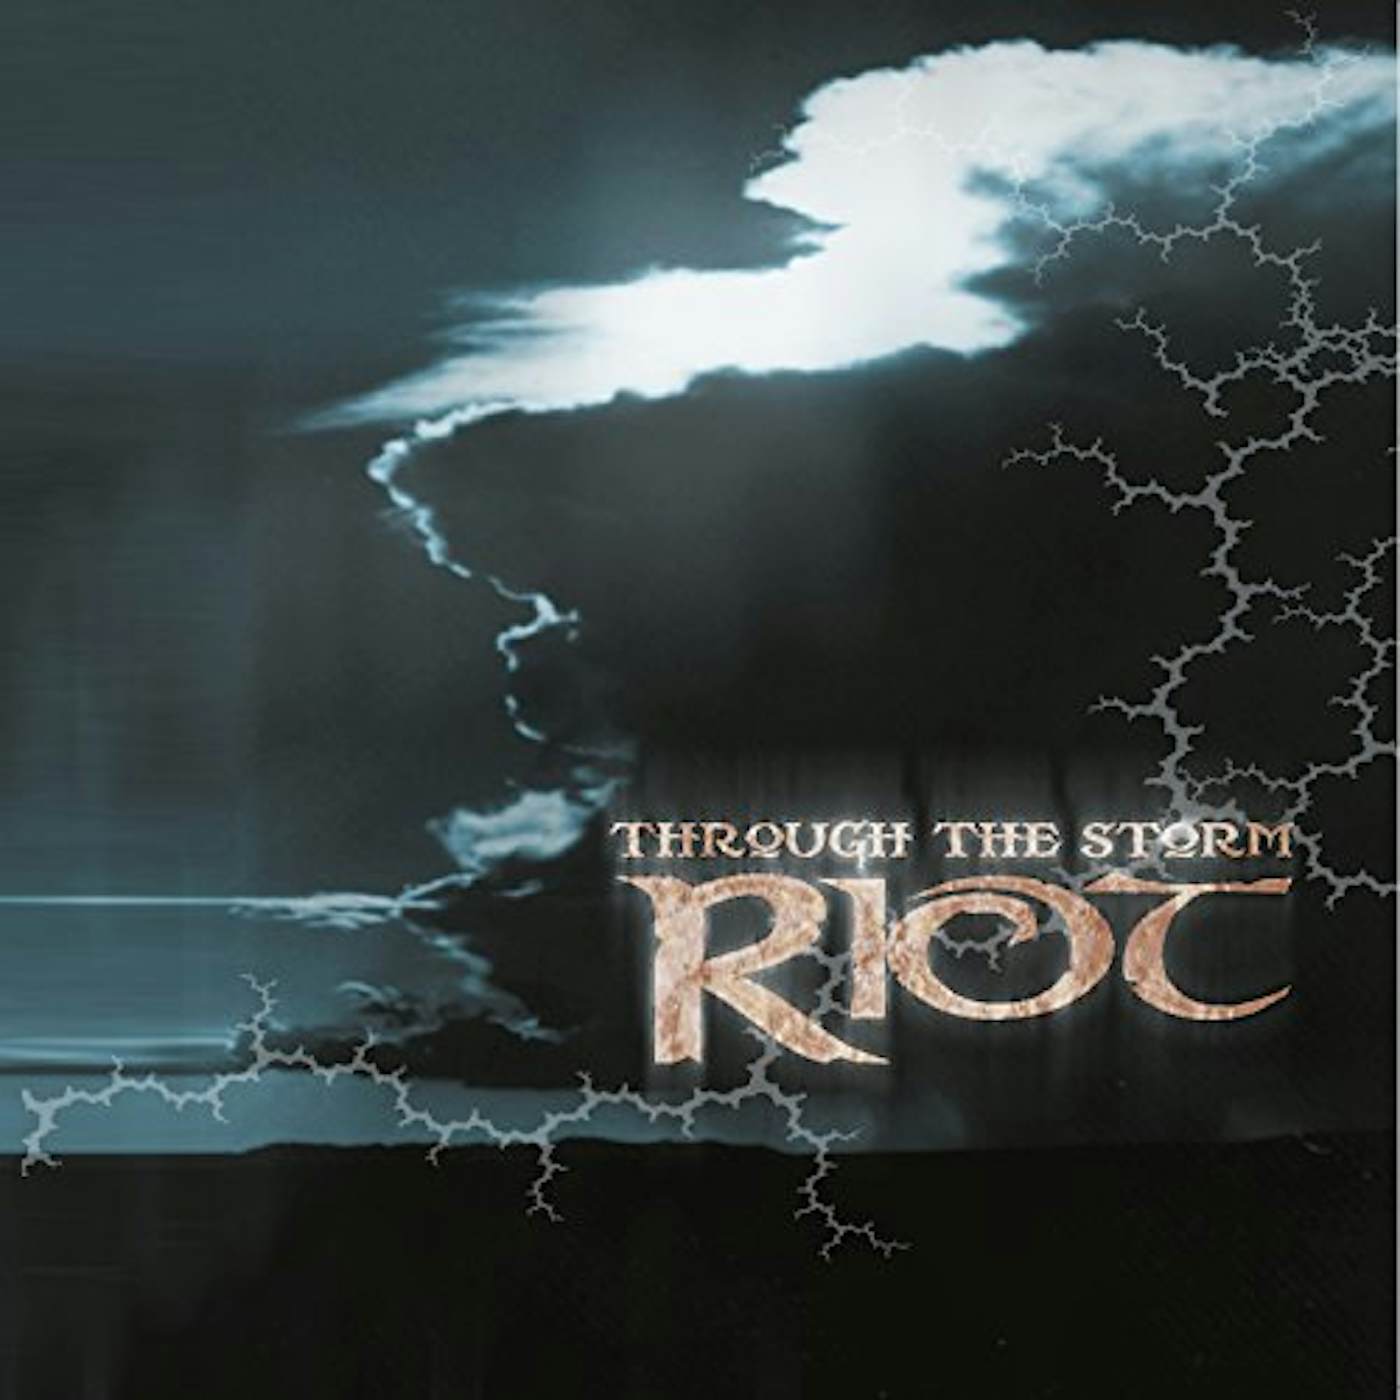 Riot THROUGH THE STORM CD